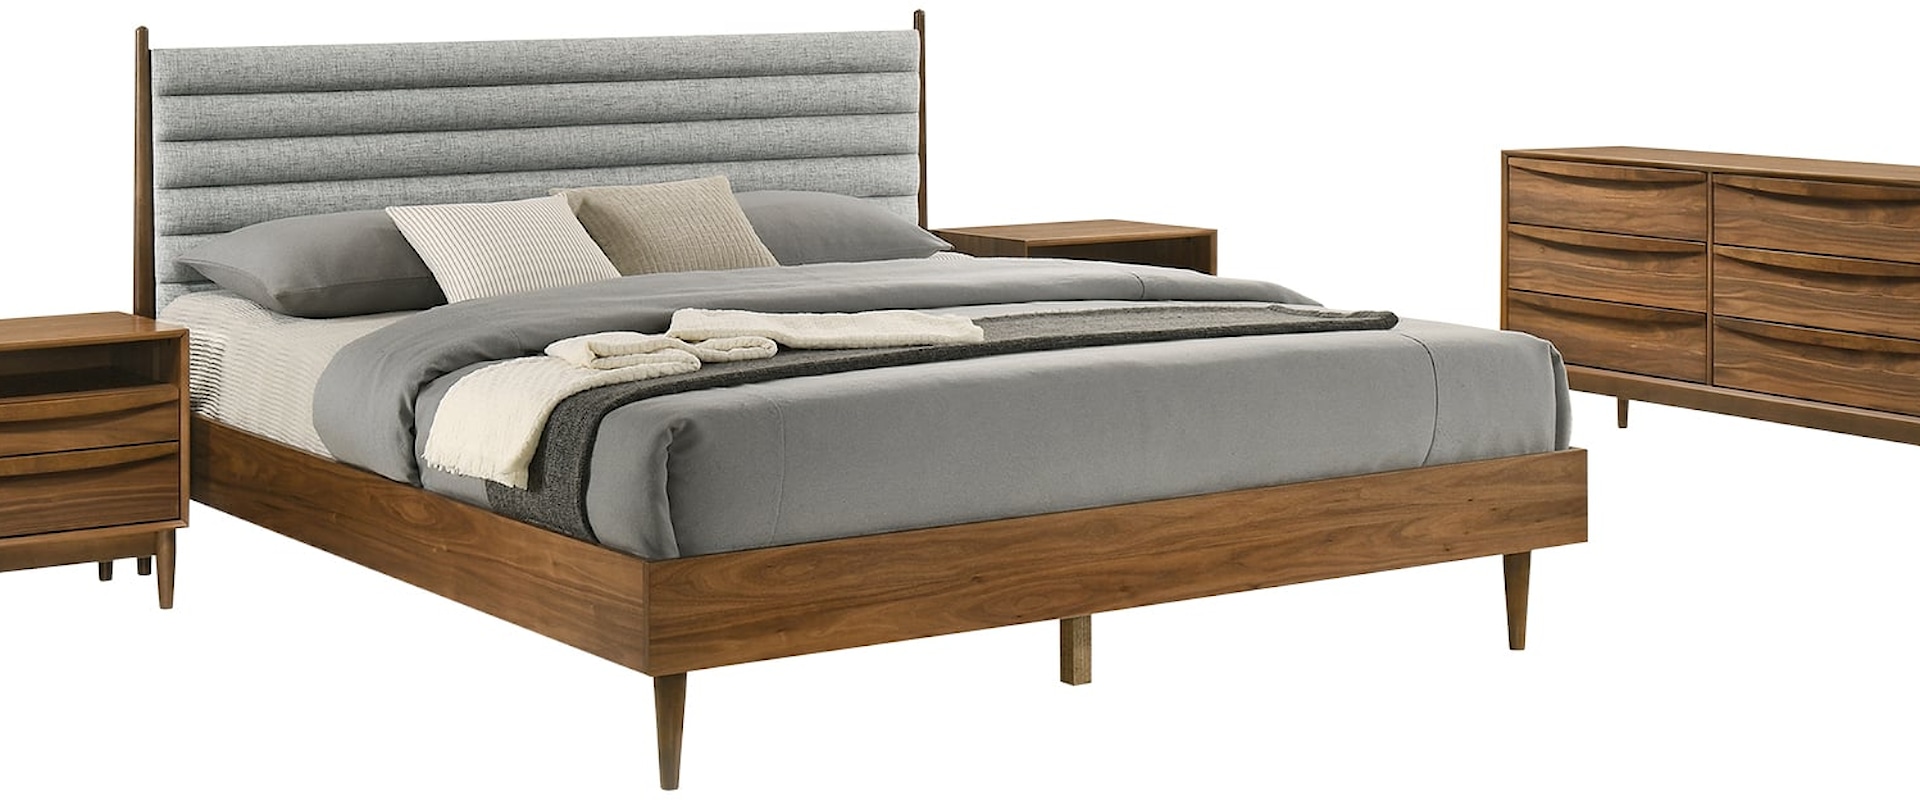 Contemporary King 4-Piece Wood Bedroom Set